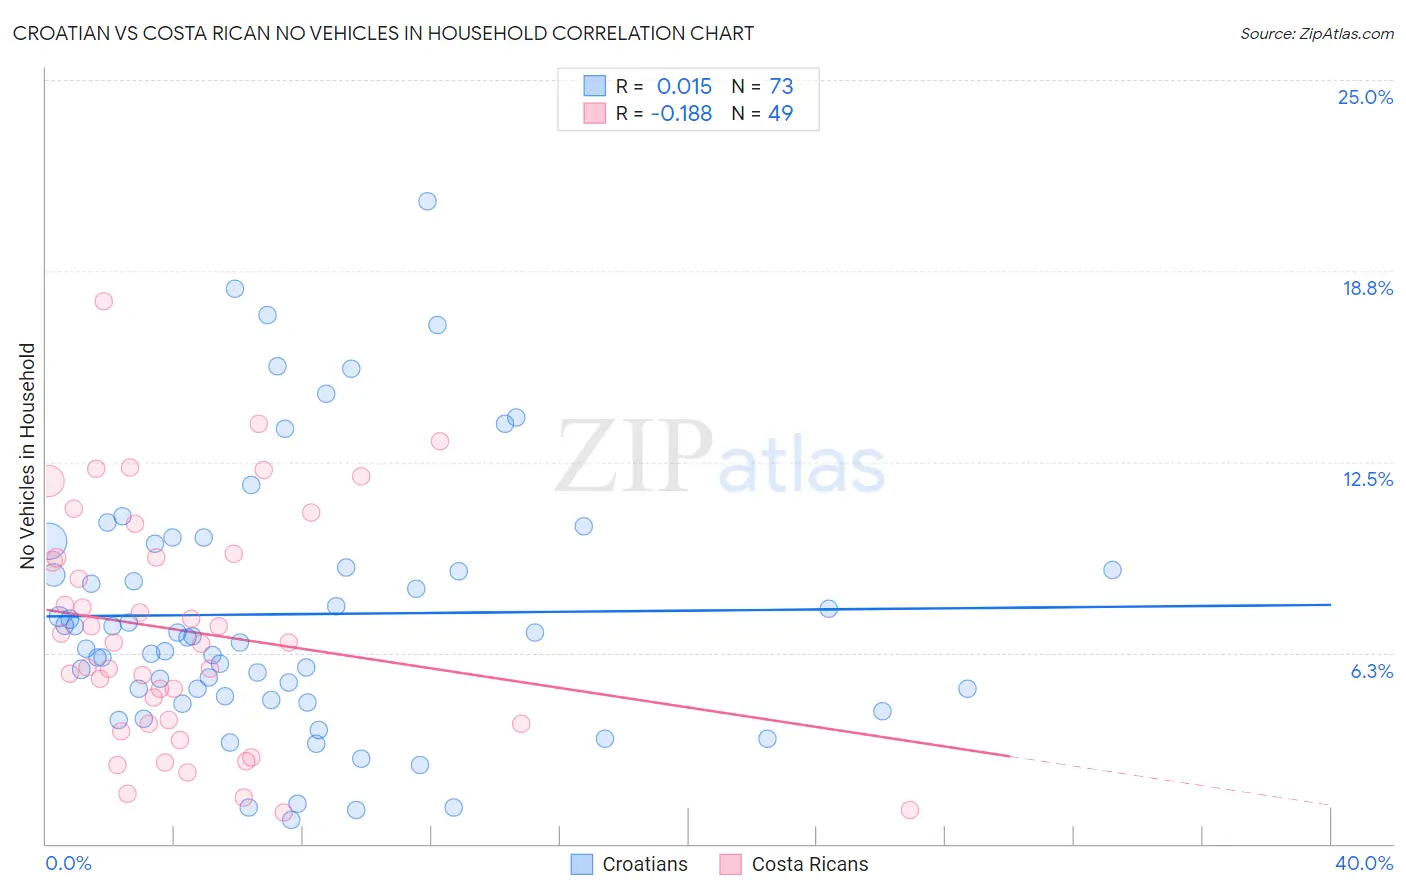 Croatian vs Costa Rican No Vehicles in Household